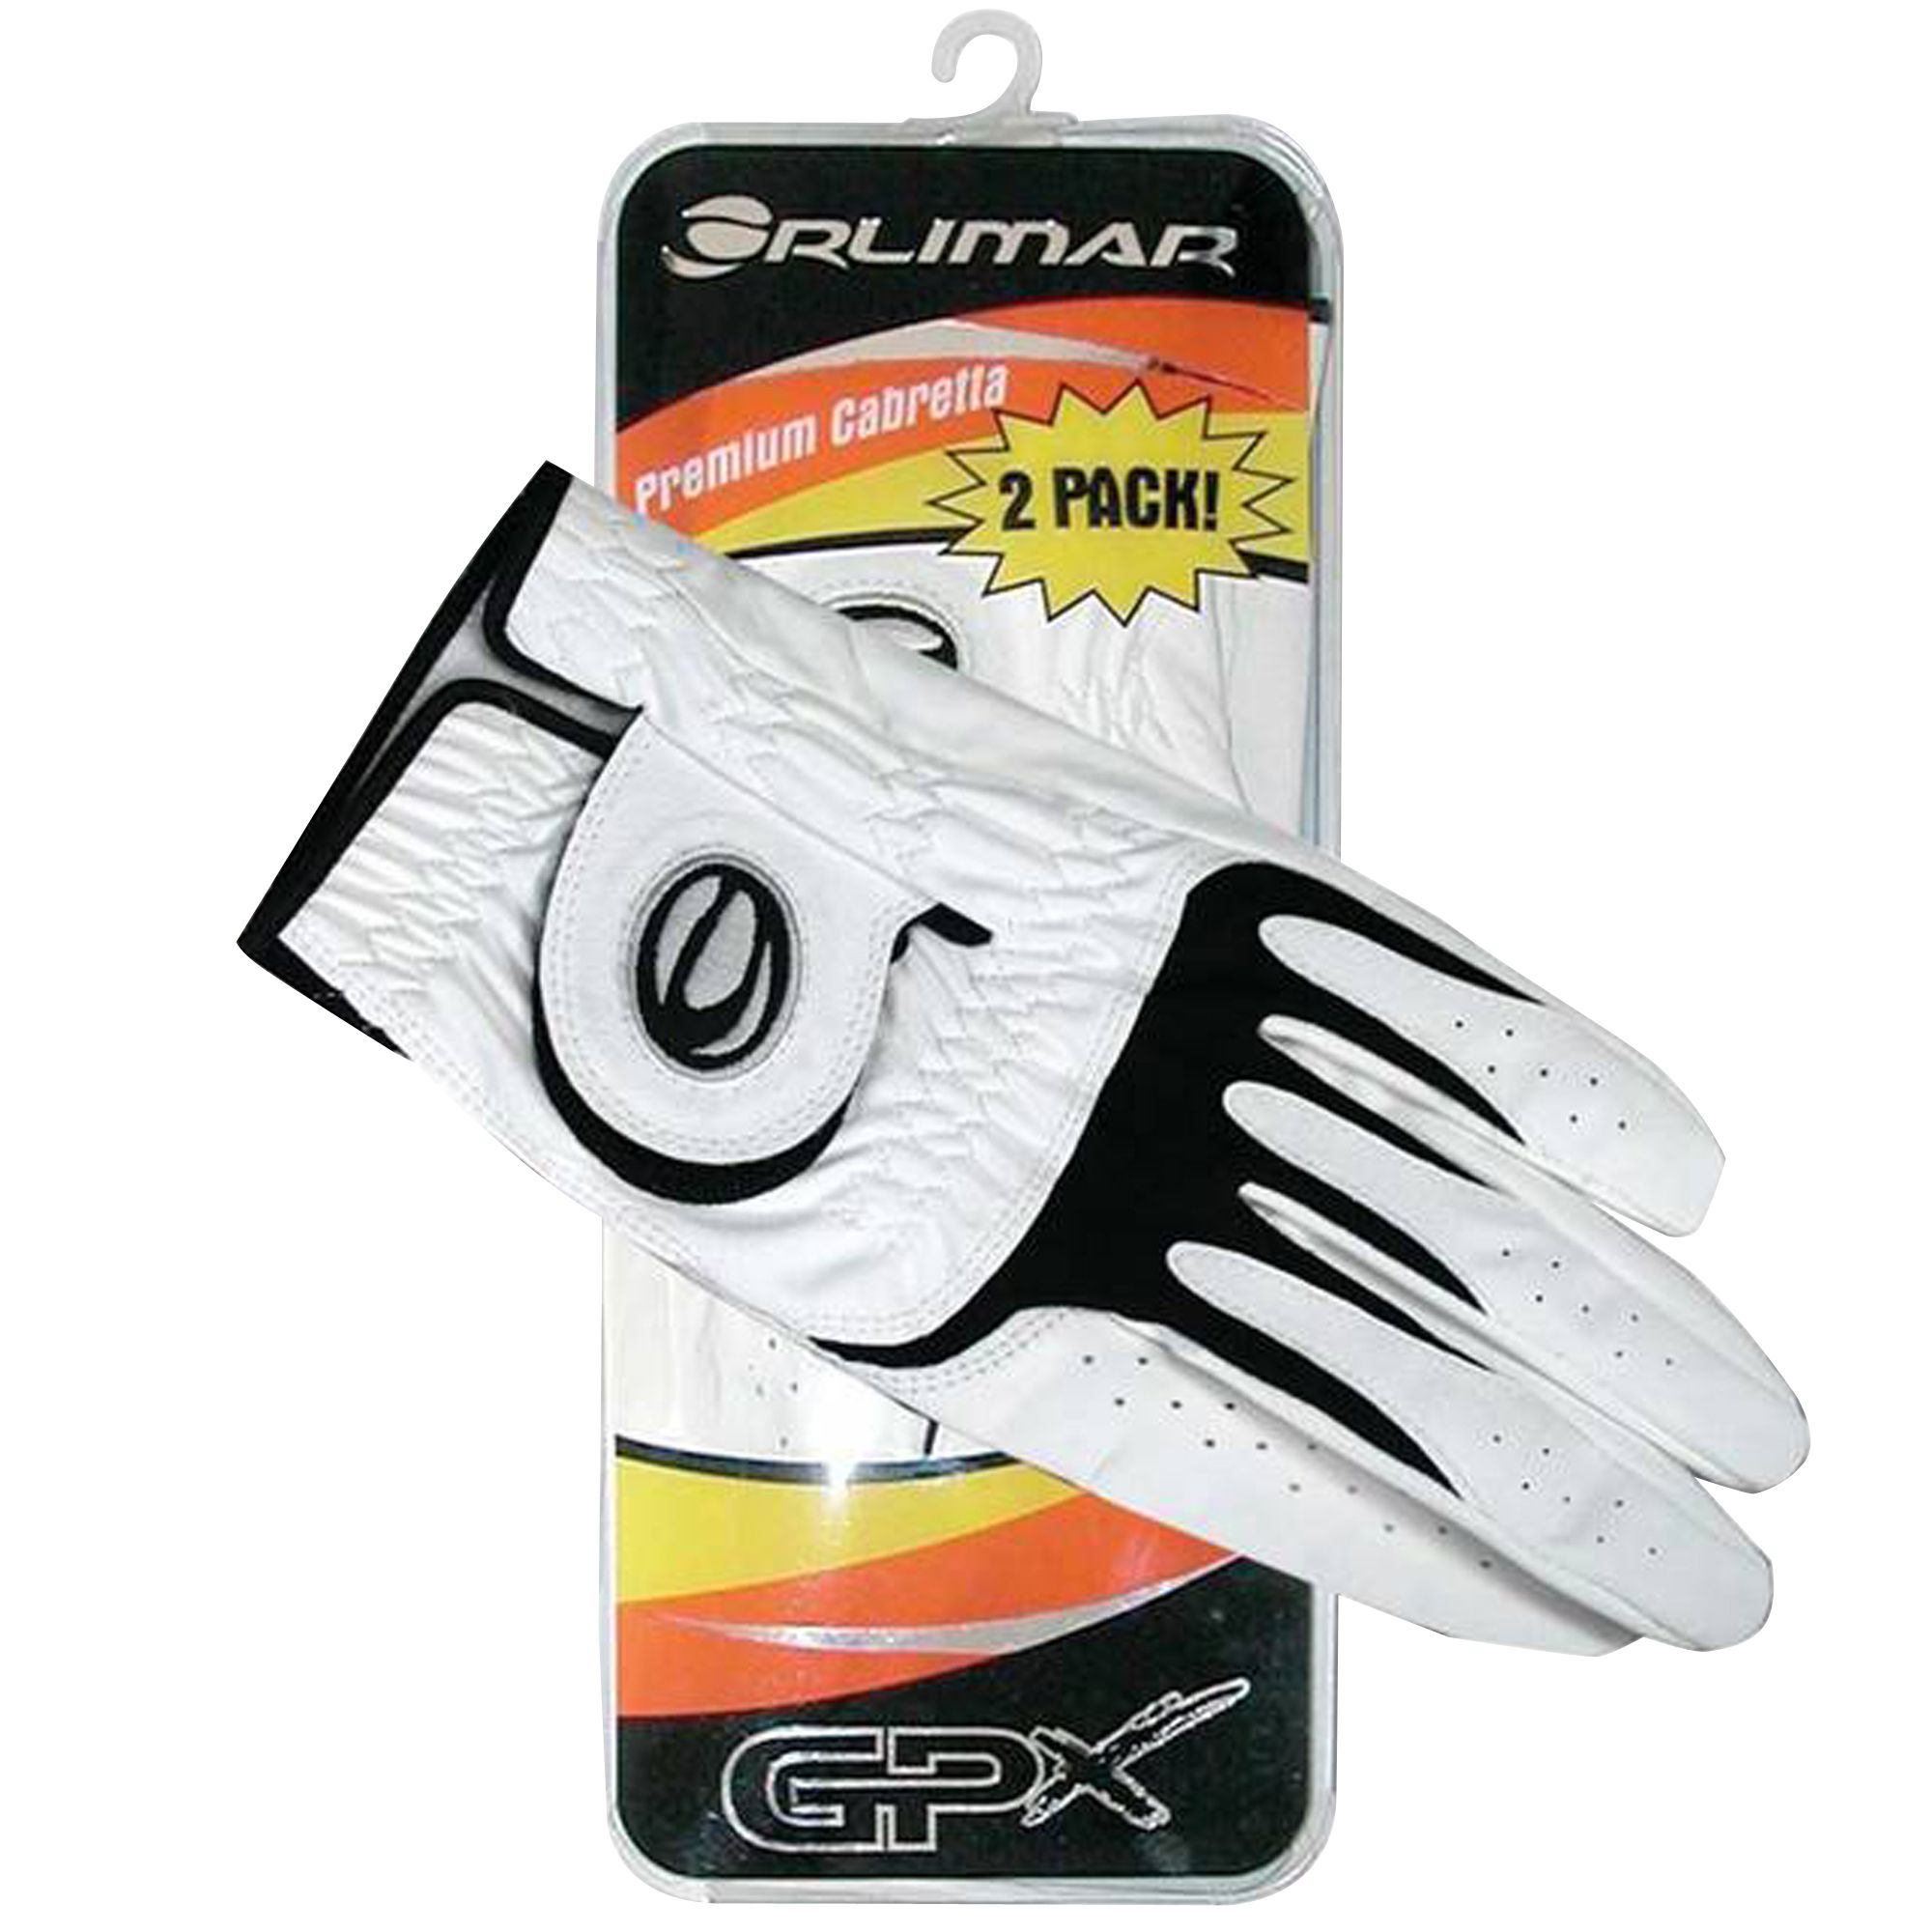 Orlimar GPX Cabretta Glove Medium/Large 2-pack